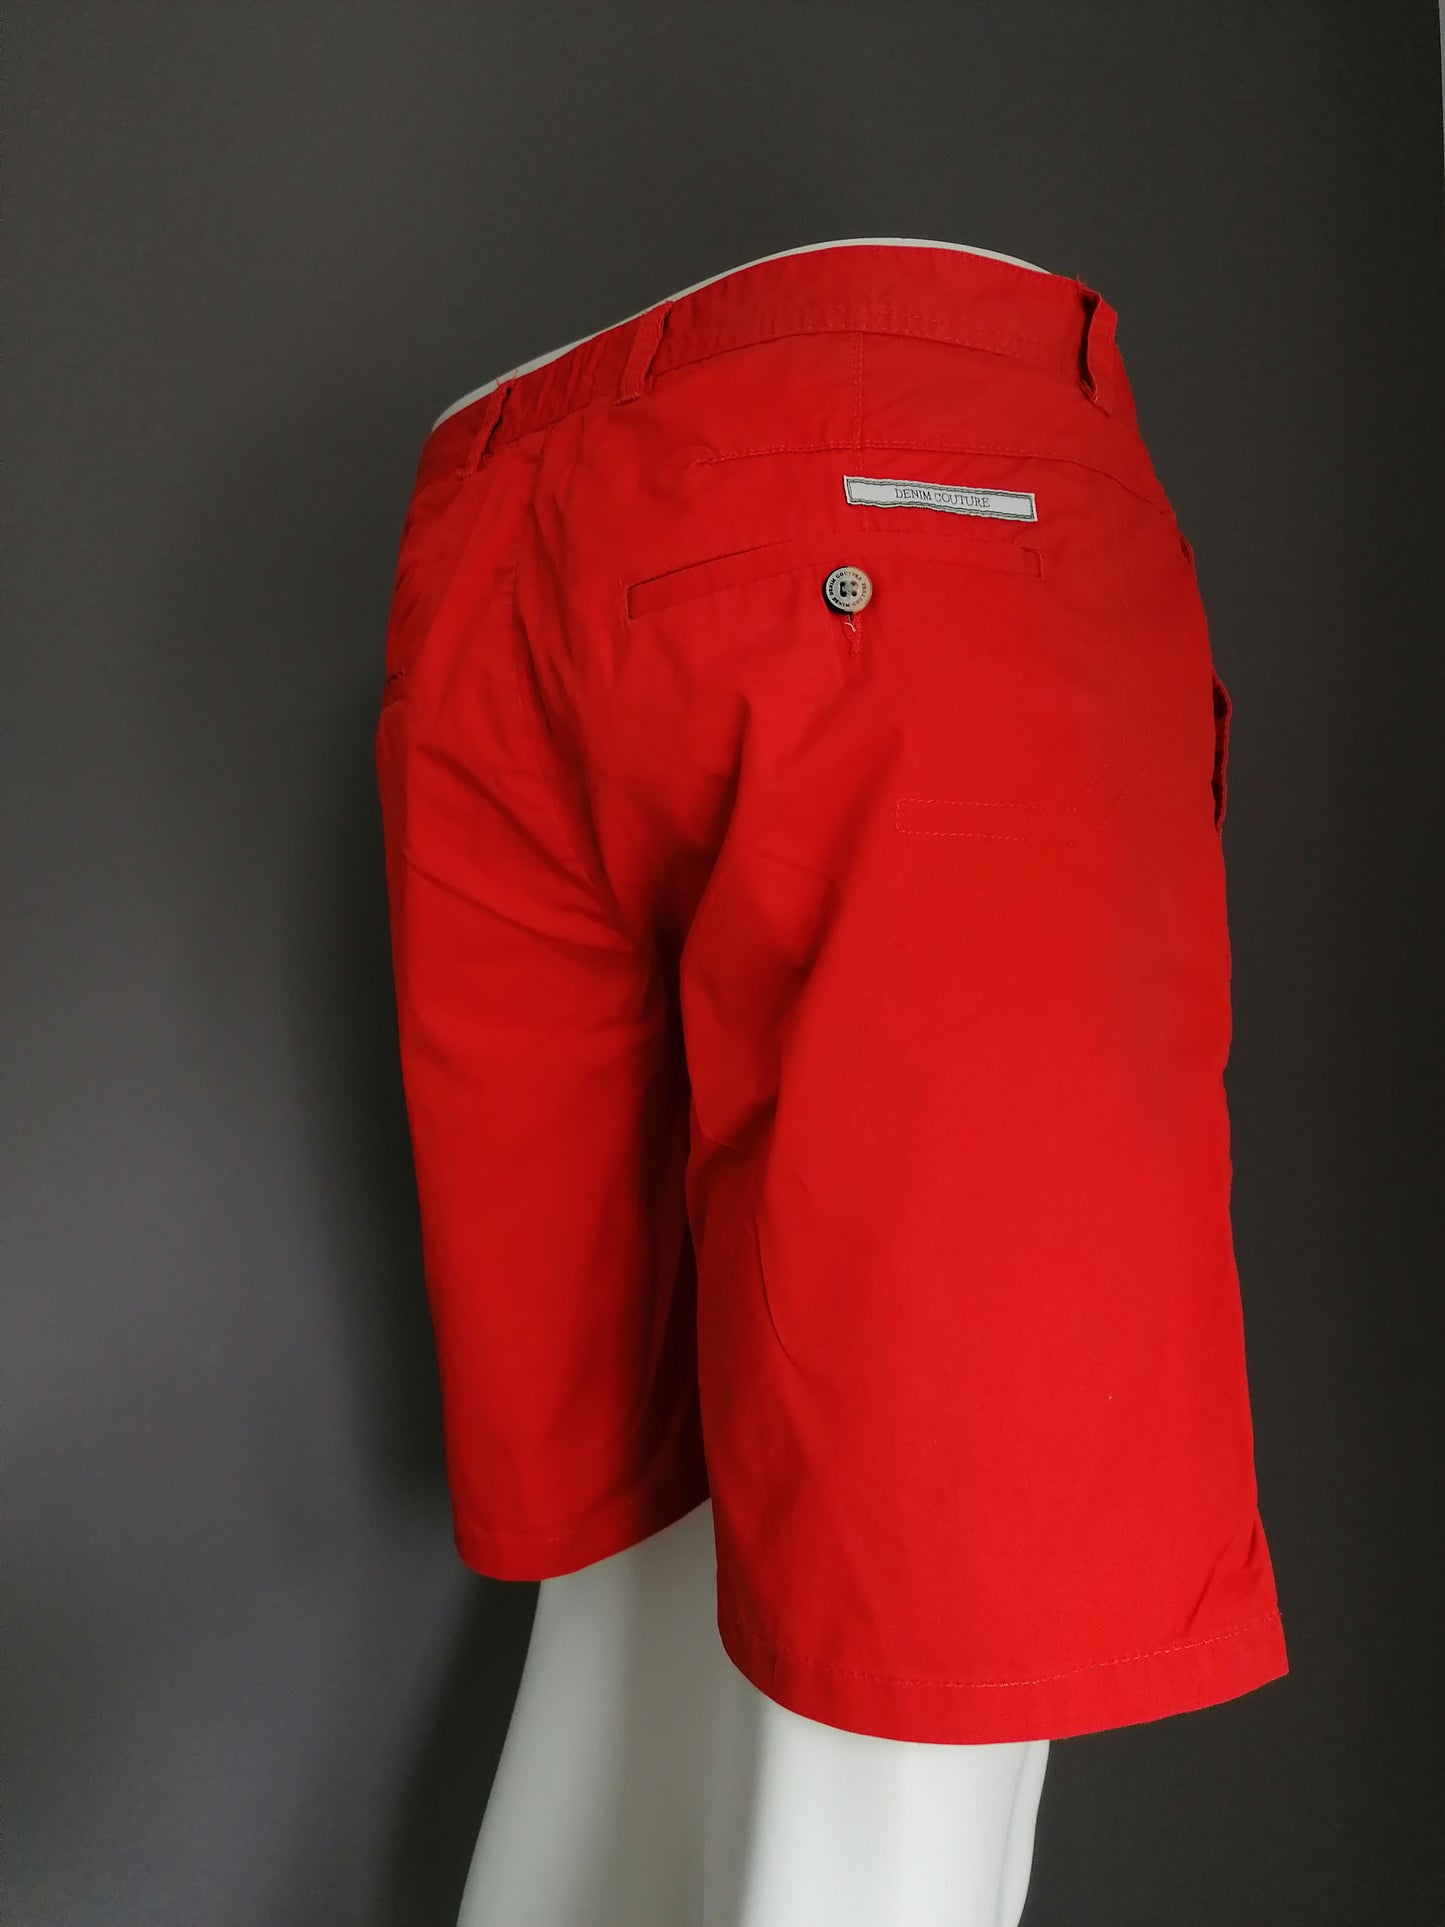 Pantalones cortos de hombre zara. Naranja coloreada. Tamaño W34